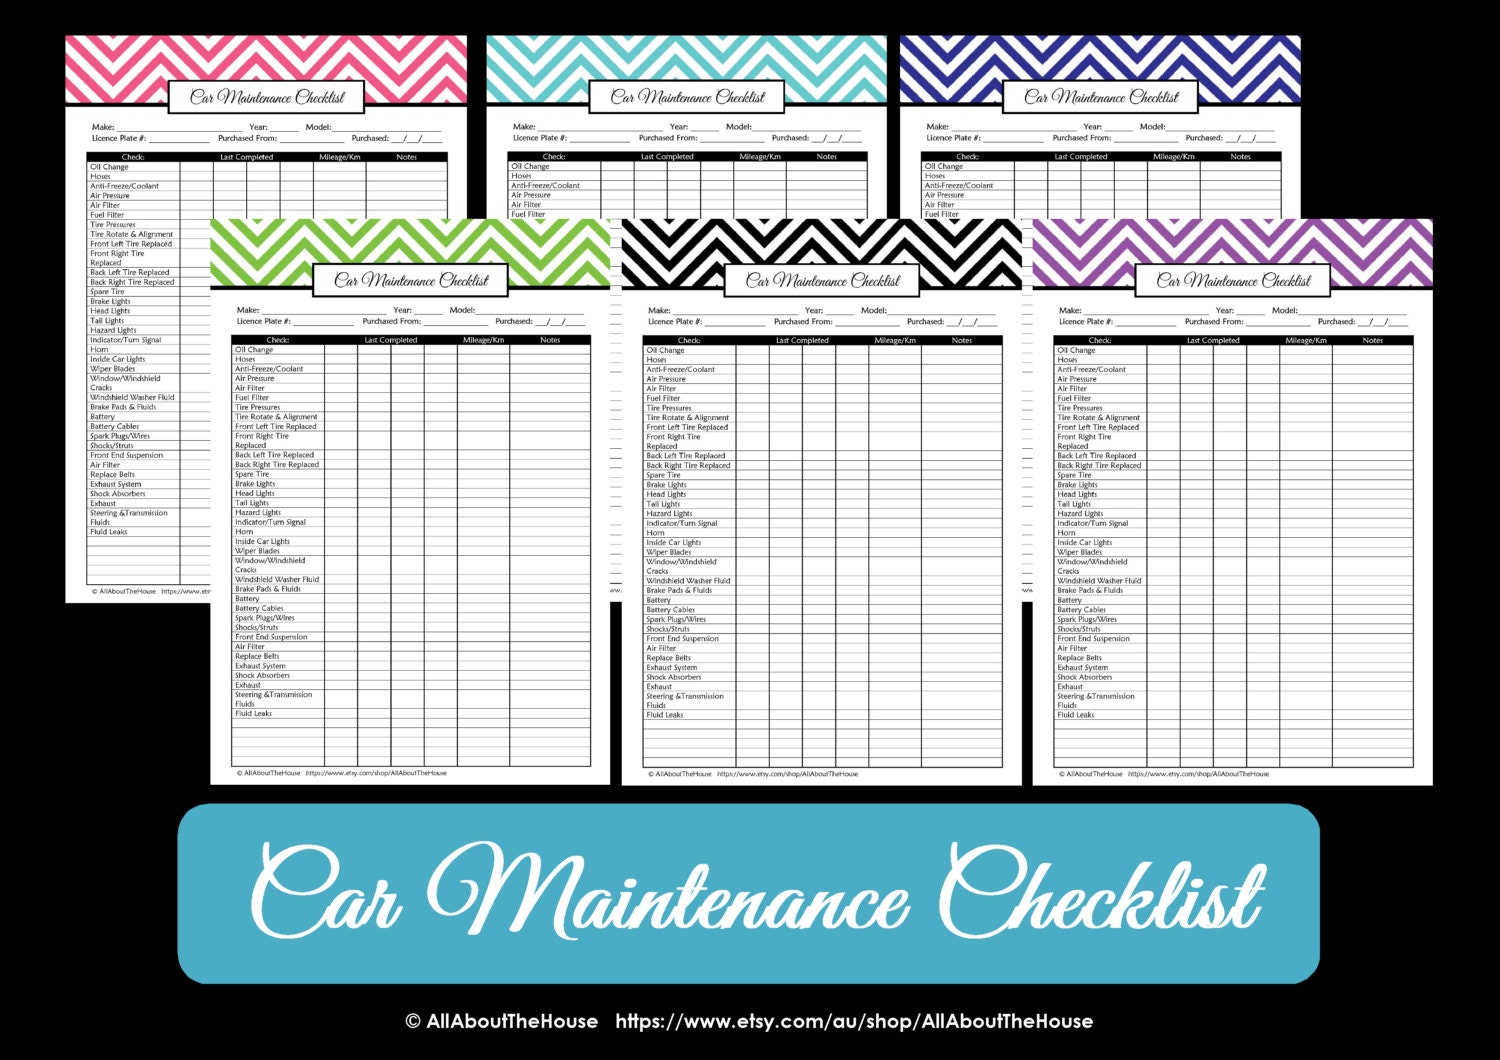 checklist of car maintenance